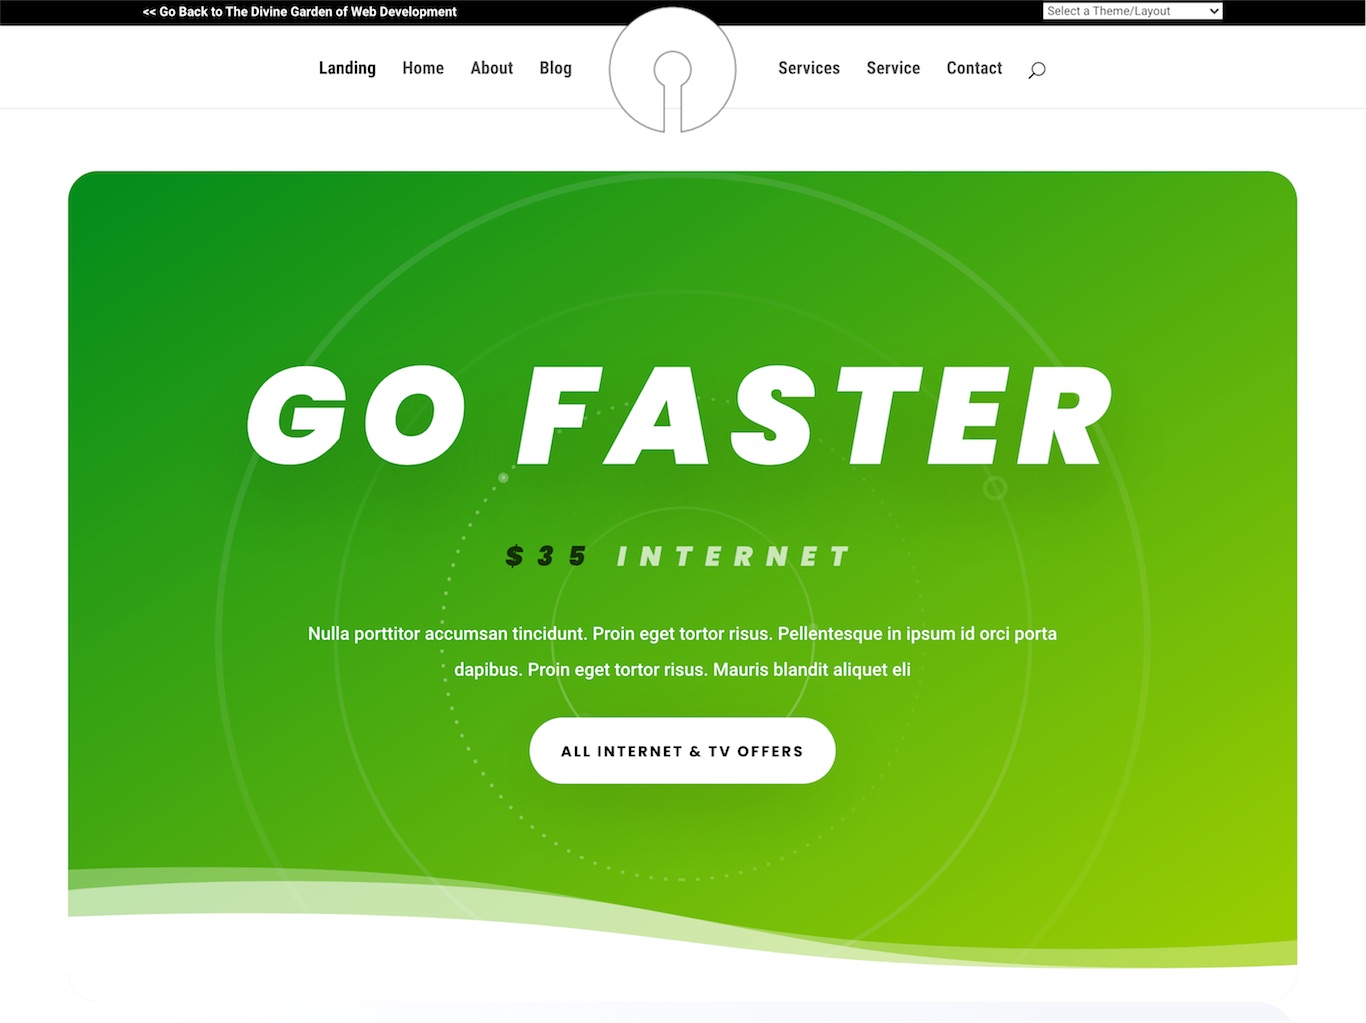 099 – Internet Service Provider